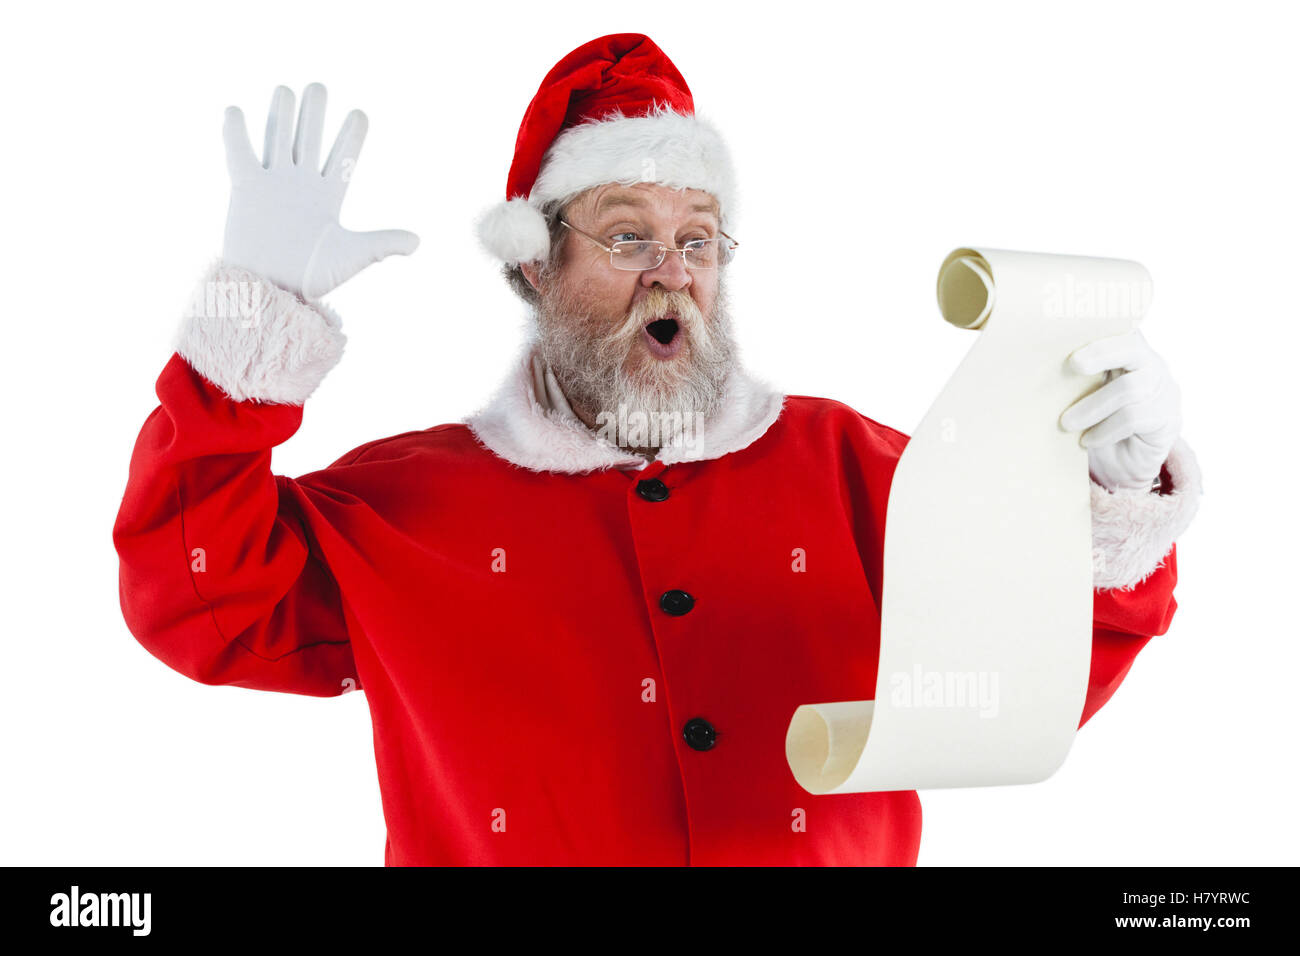 Santa claus making facial expression while reading scroll Stock Photo